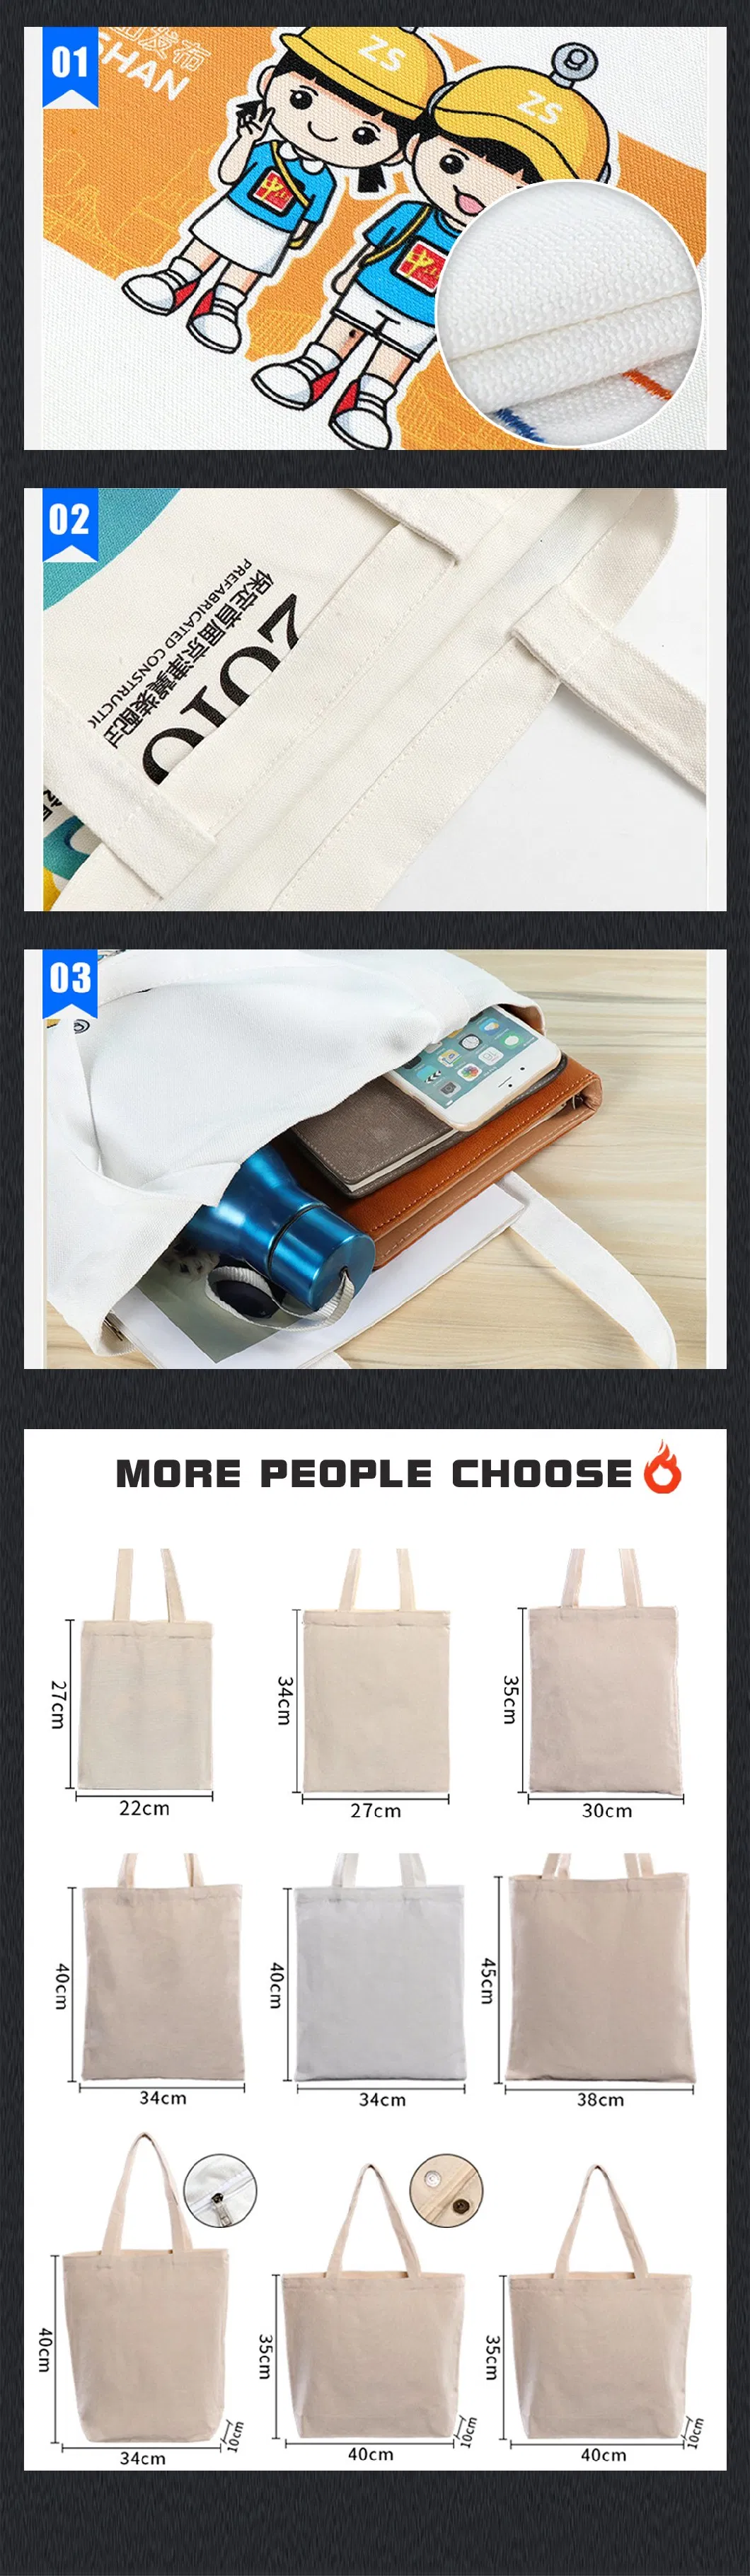 Wholesale Custom Tote Bag with Printed Logo Canvas Shopper Bag